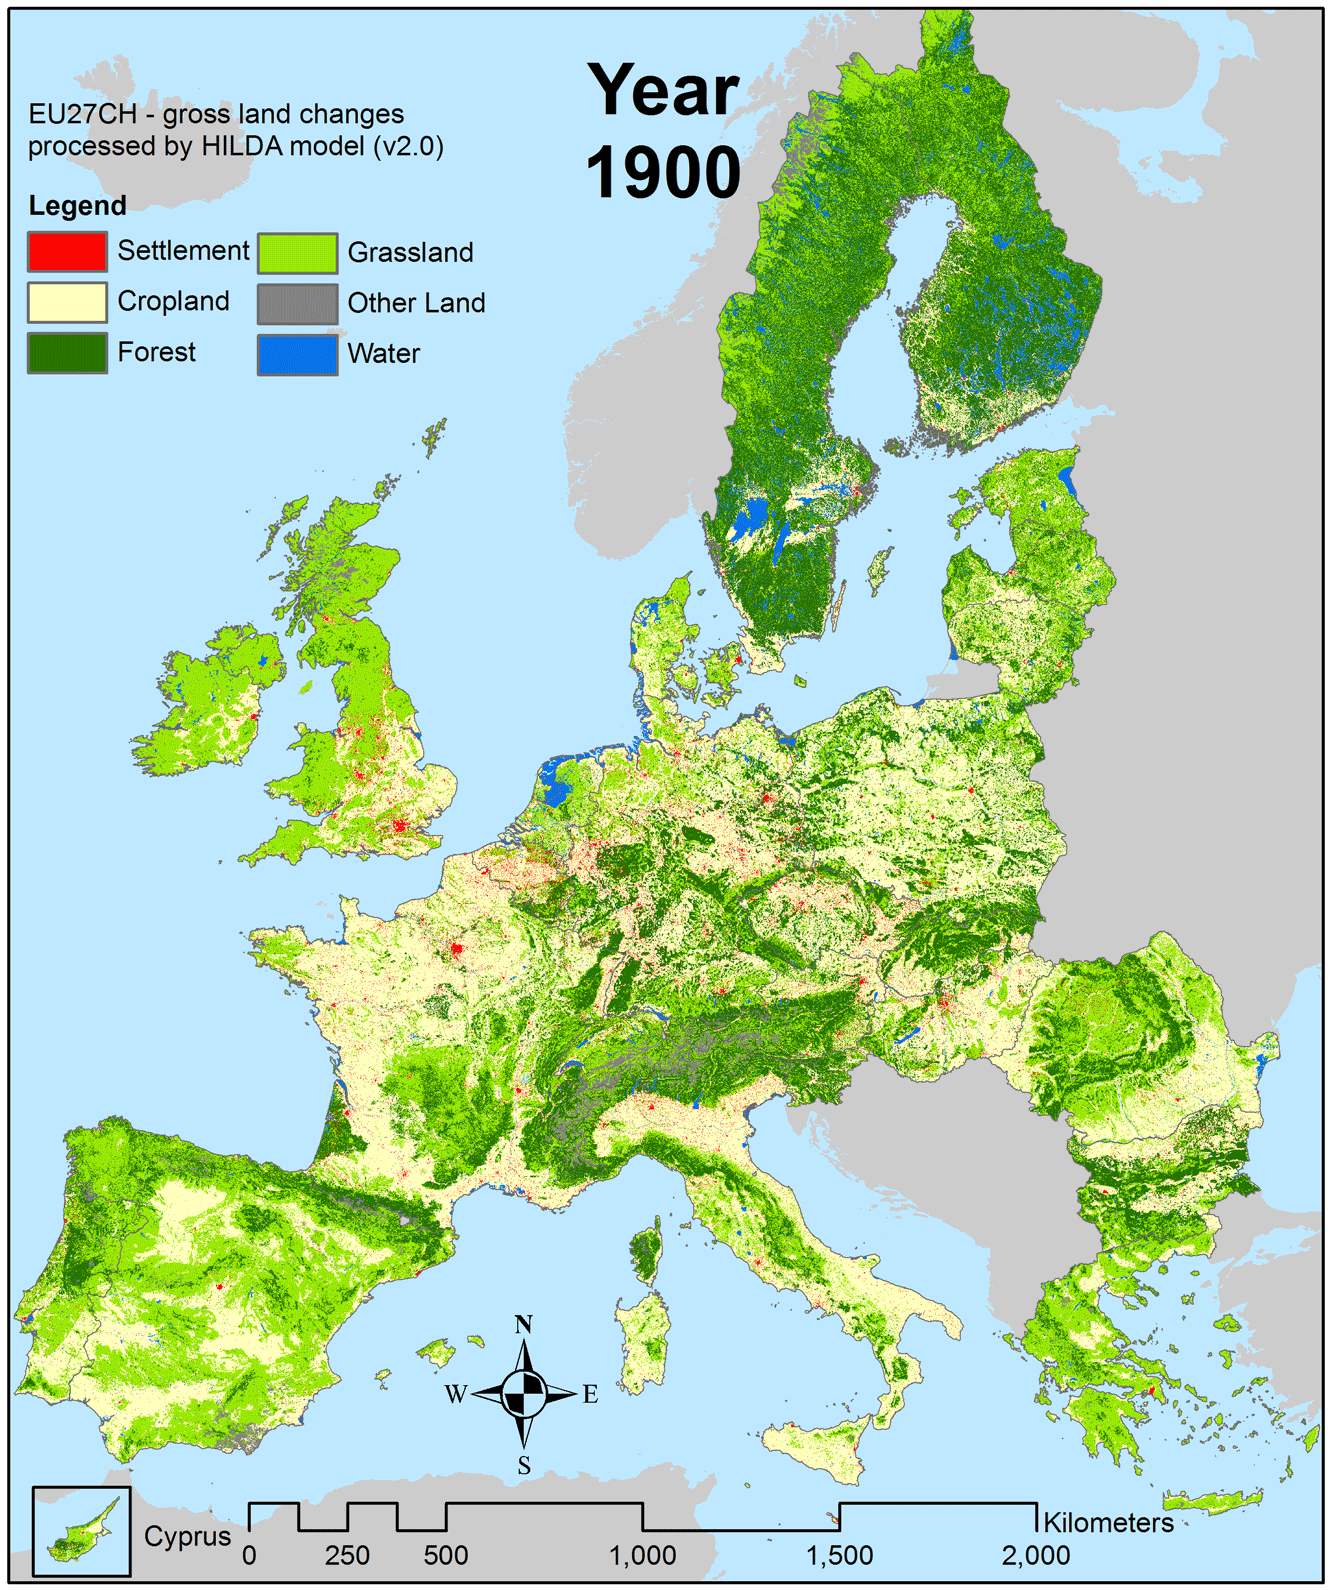 Reforestation in Europe